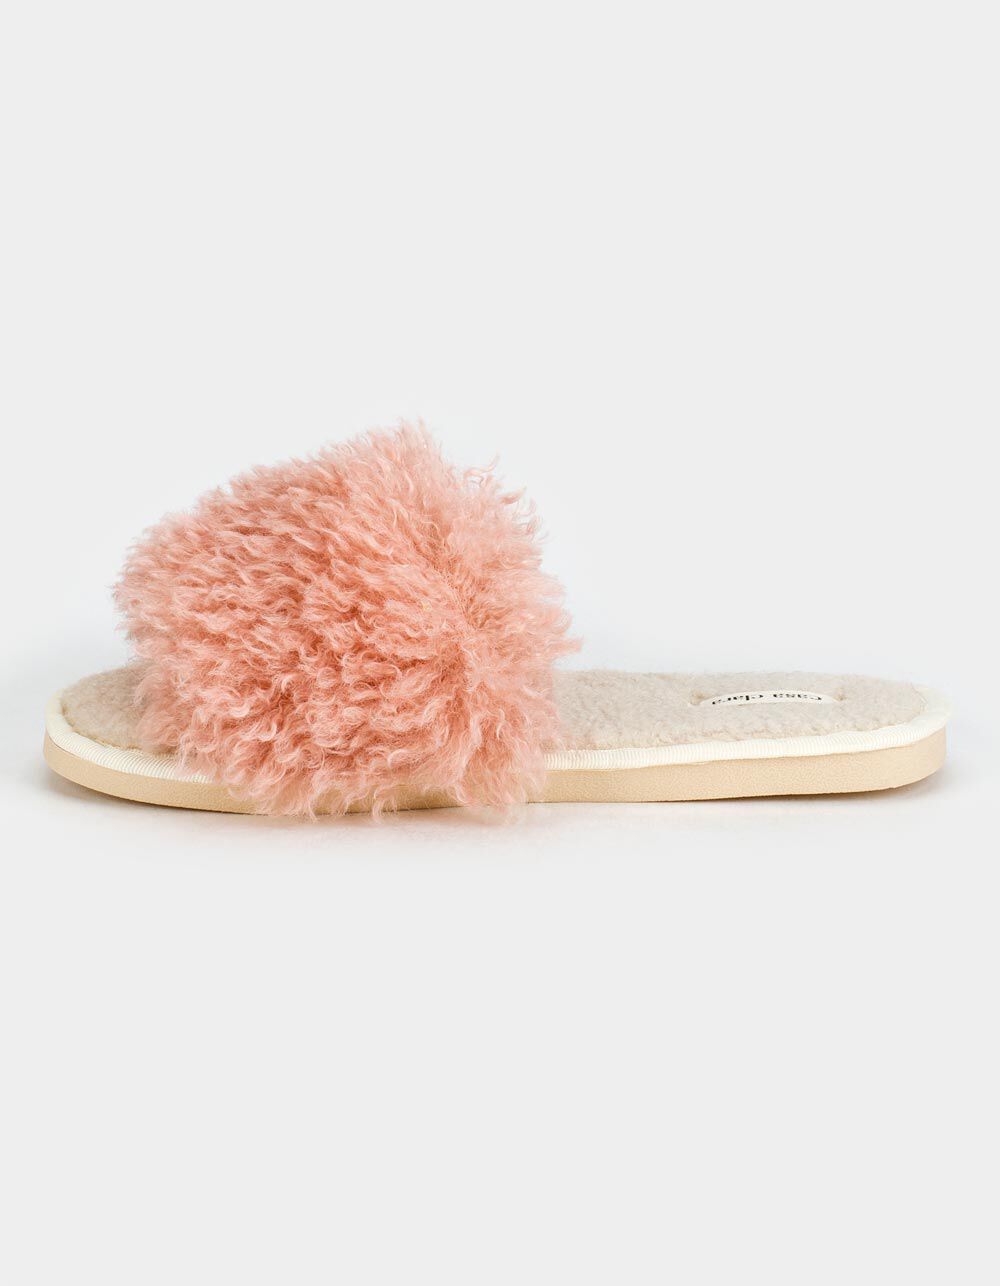 CASA CLARA Lola Womens Pink Slippers - PINK | Tillys